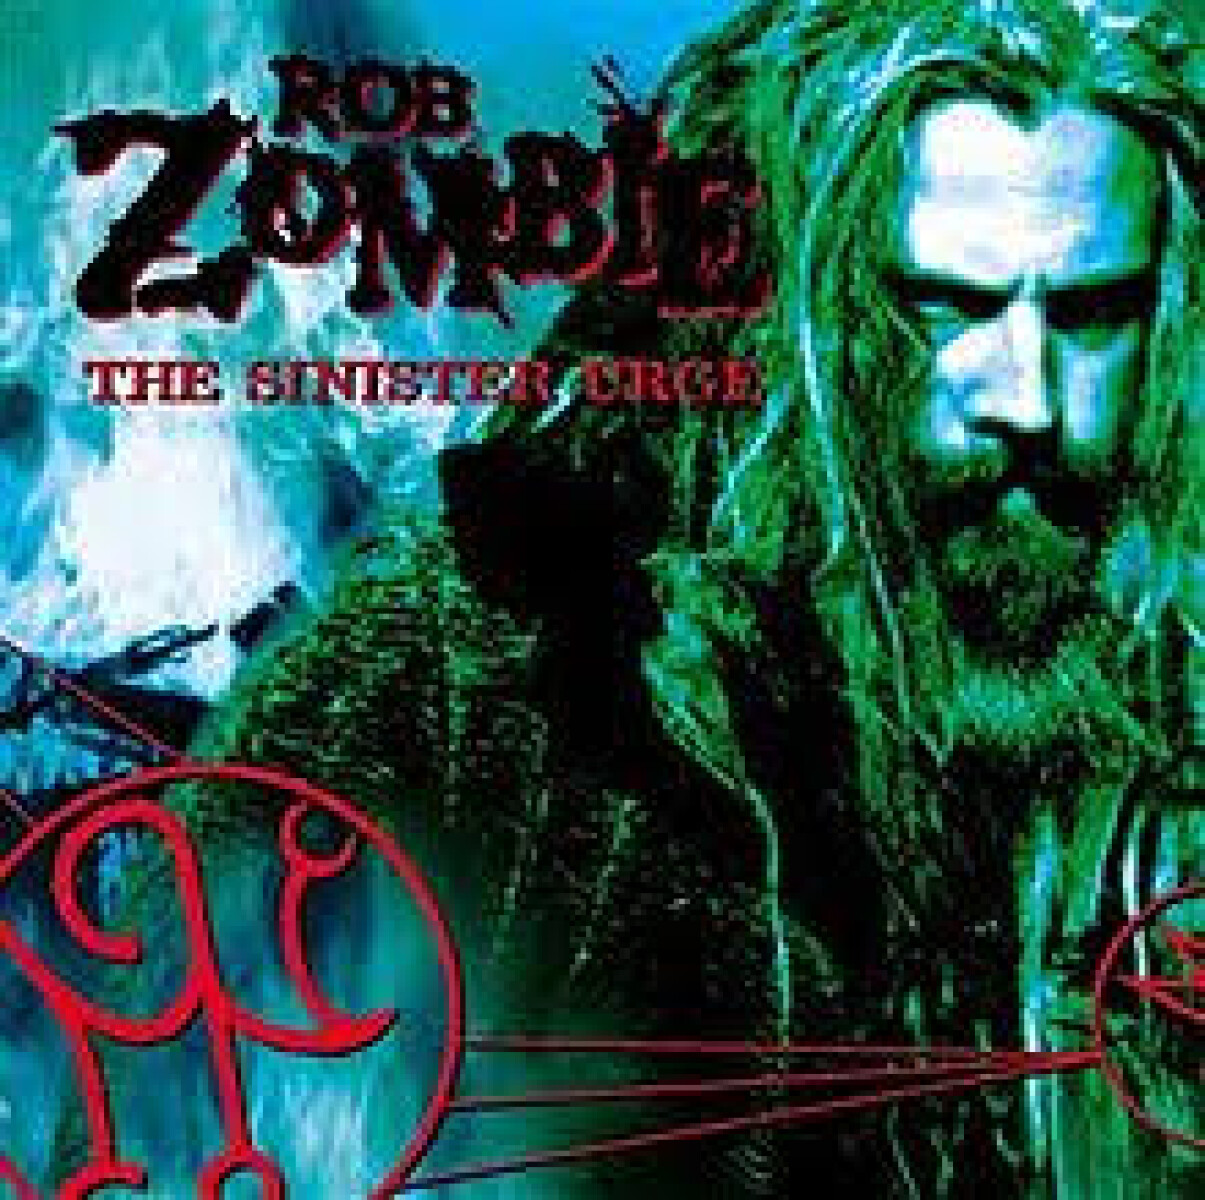 Zombie Rob-the Sinister Urge - Vinilo 